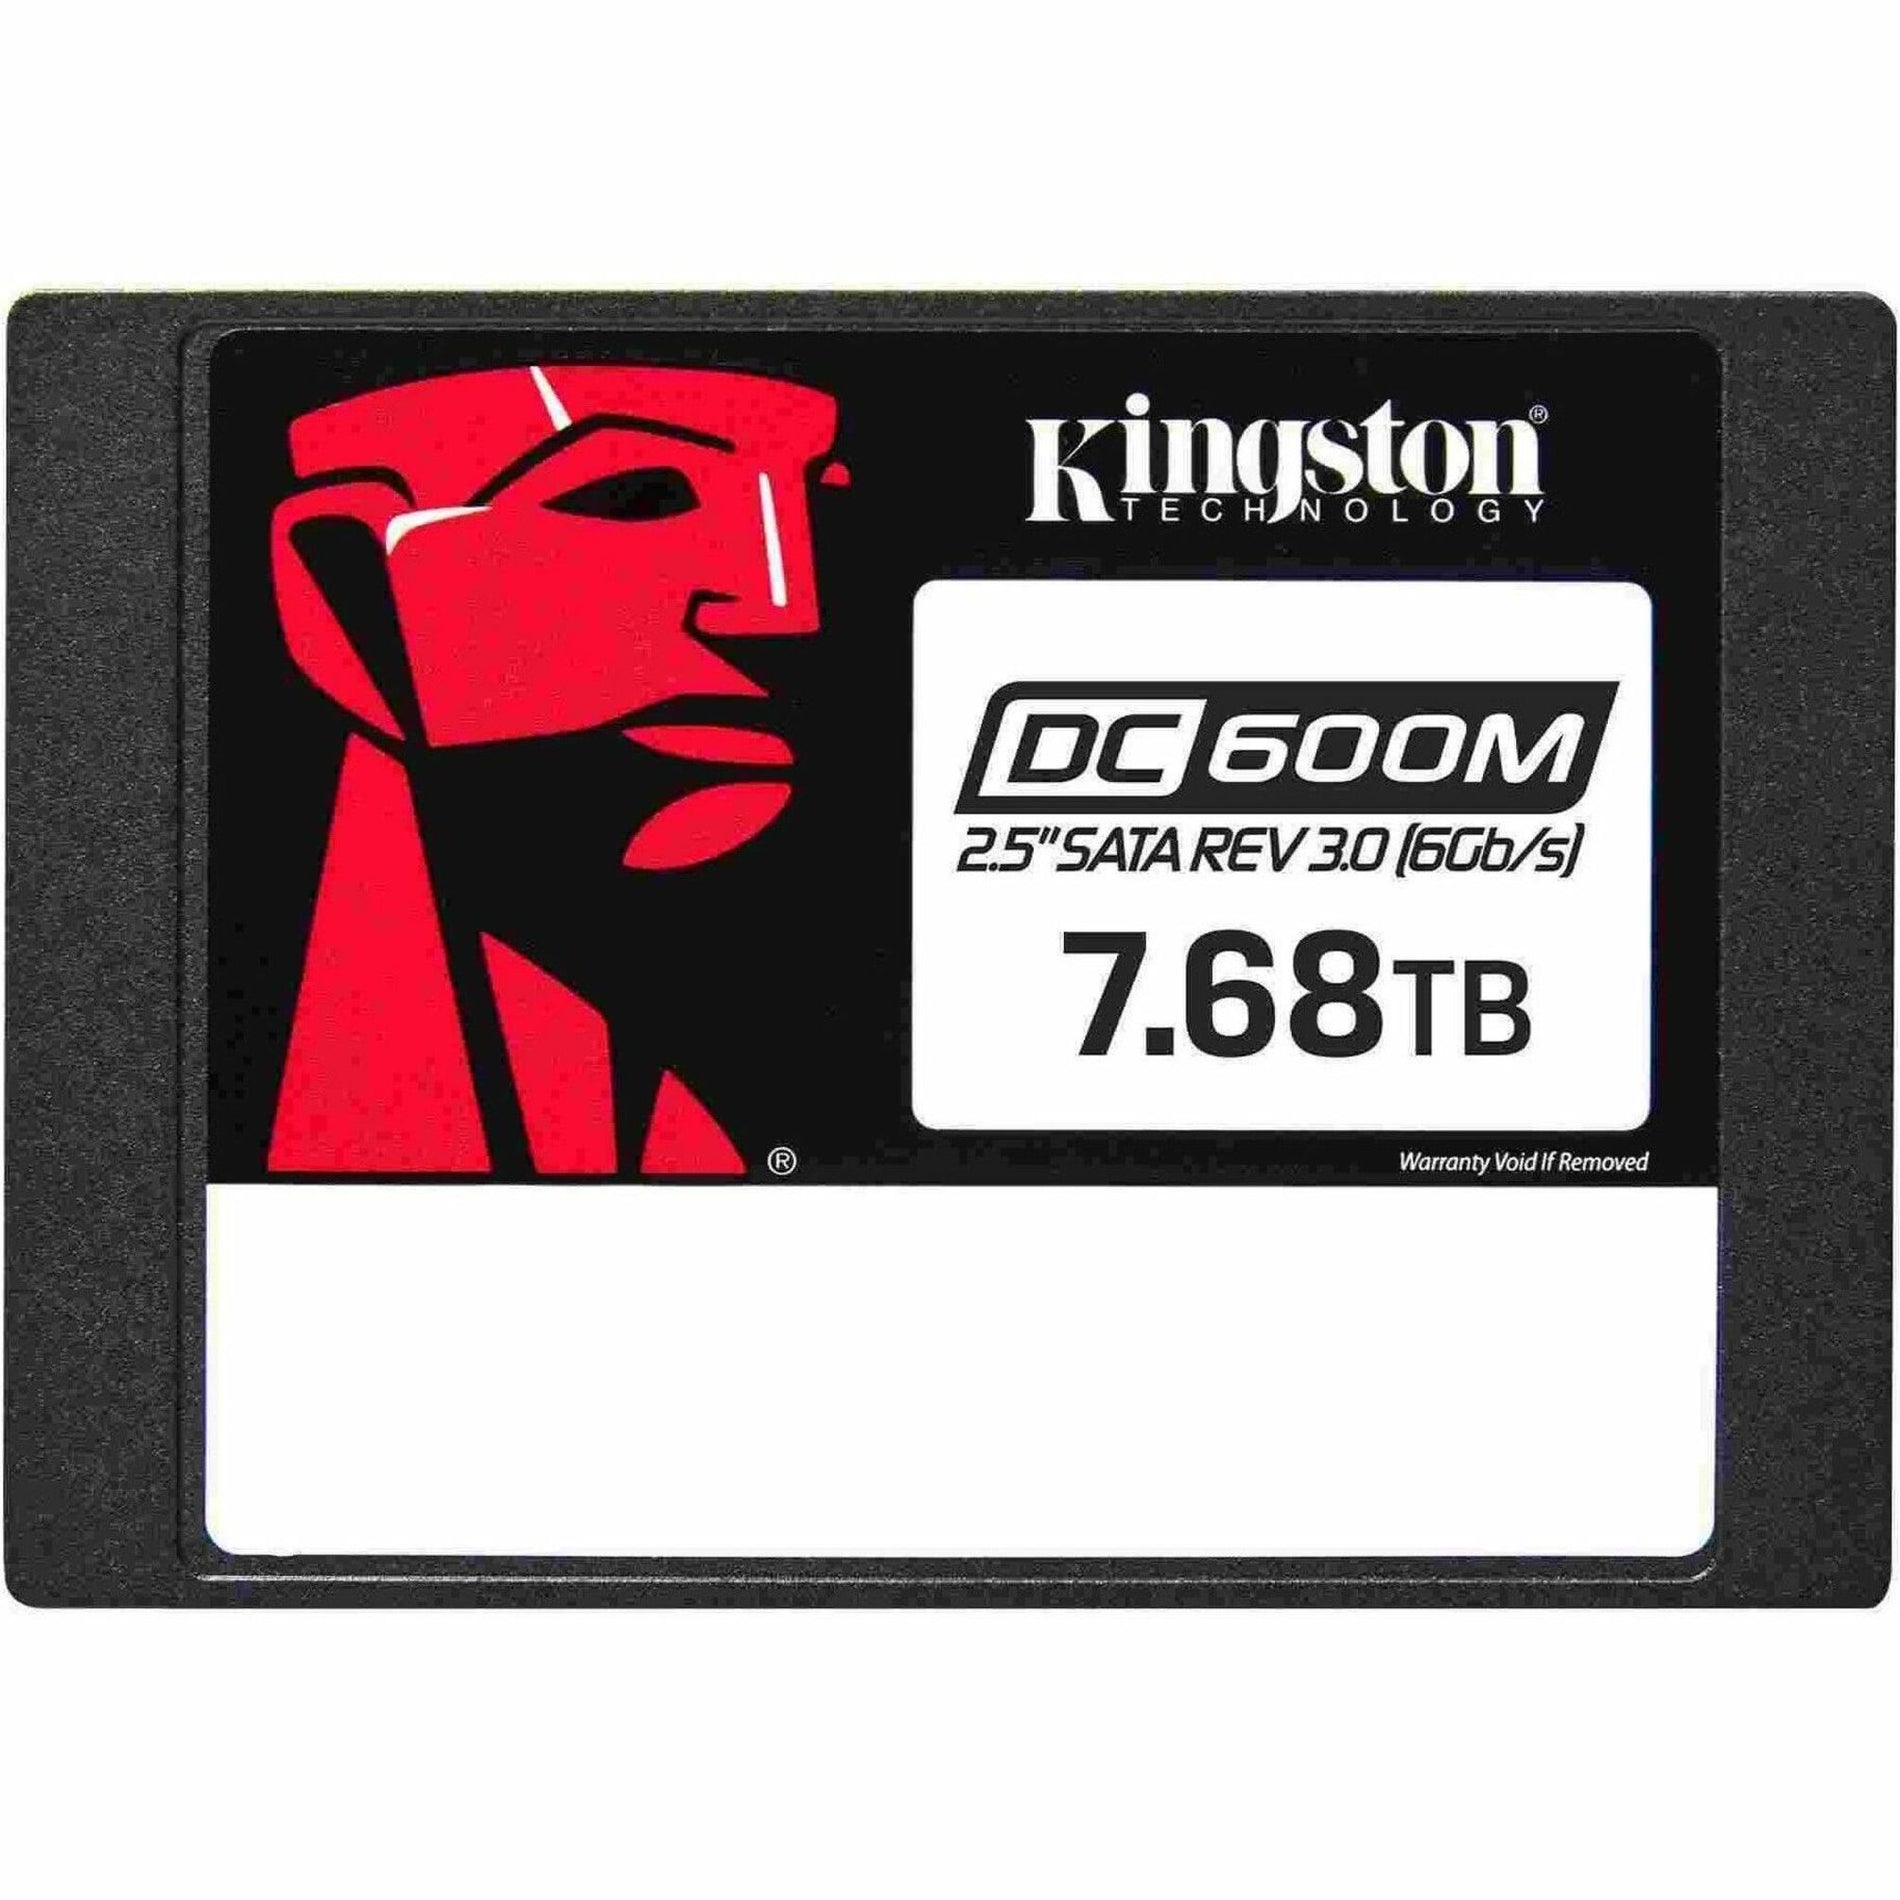 Kingston SEDC600M/7680G DC600M 2.5 Enterprise SATA SSD, 7.5TB Storage Capacity, 5 Year Warranty